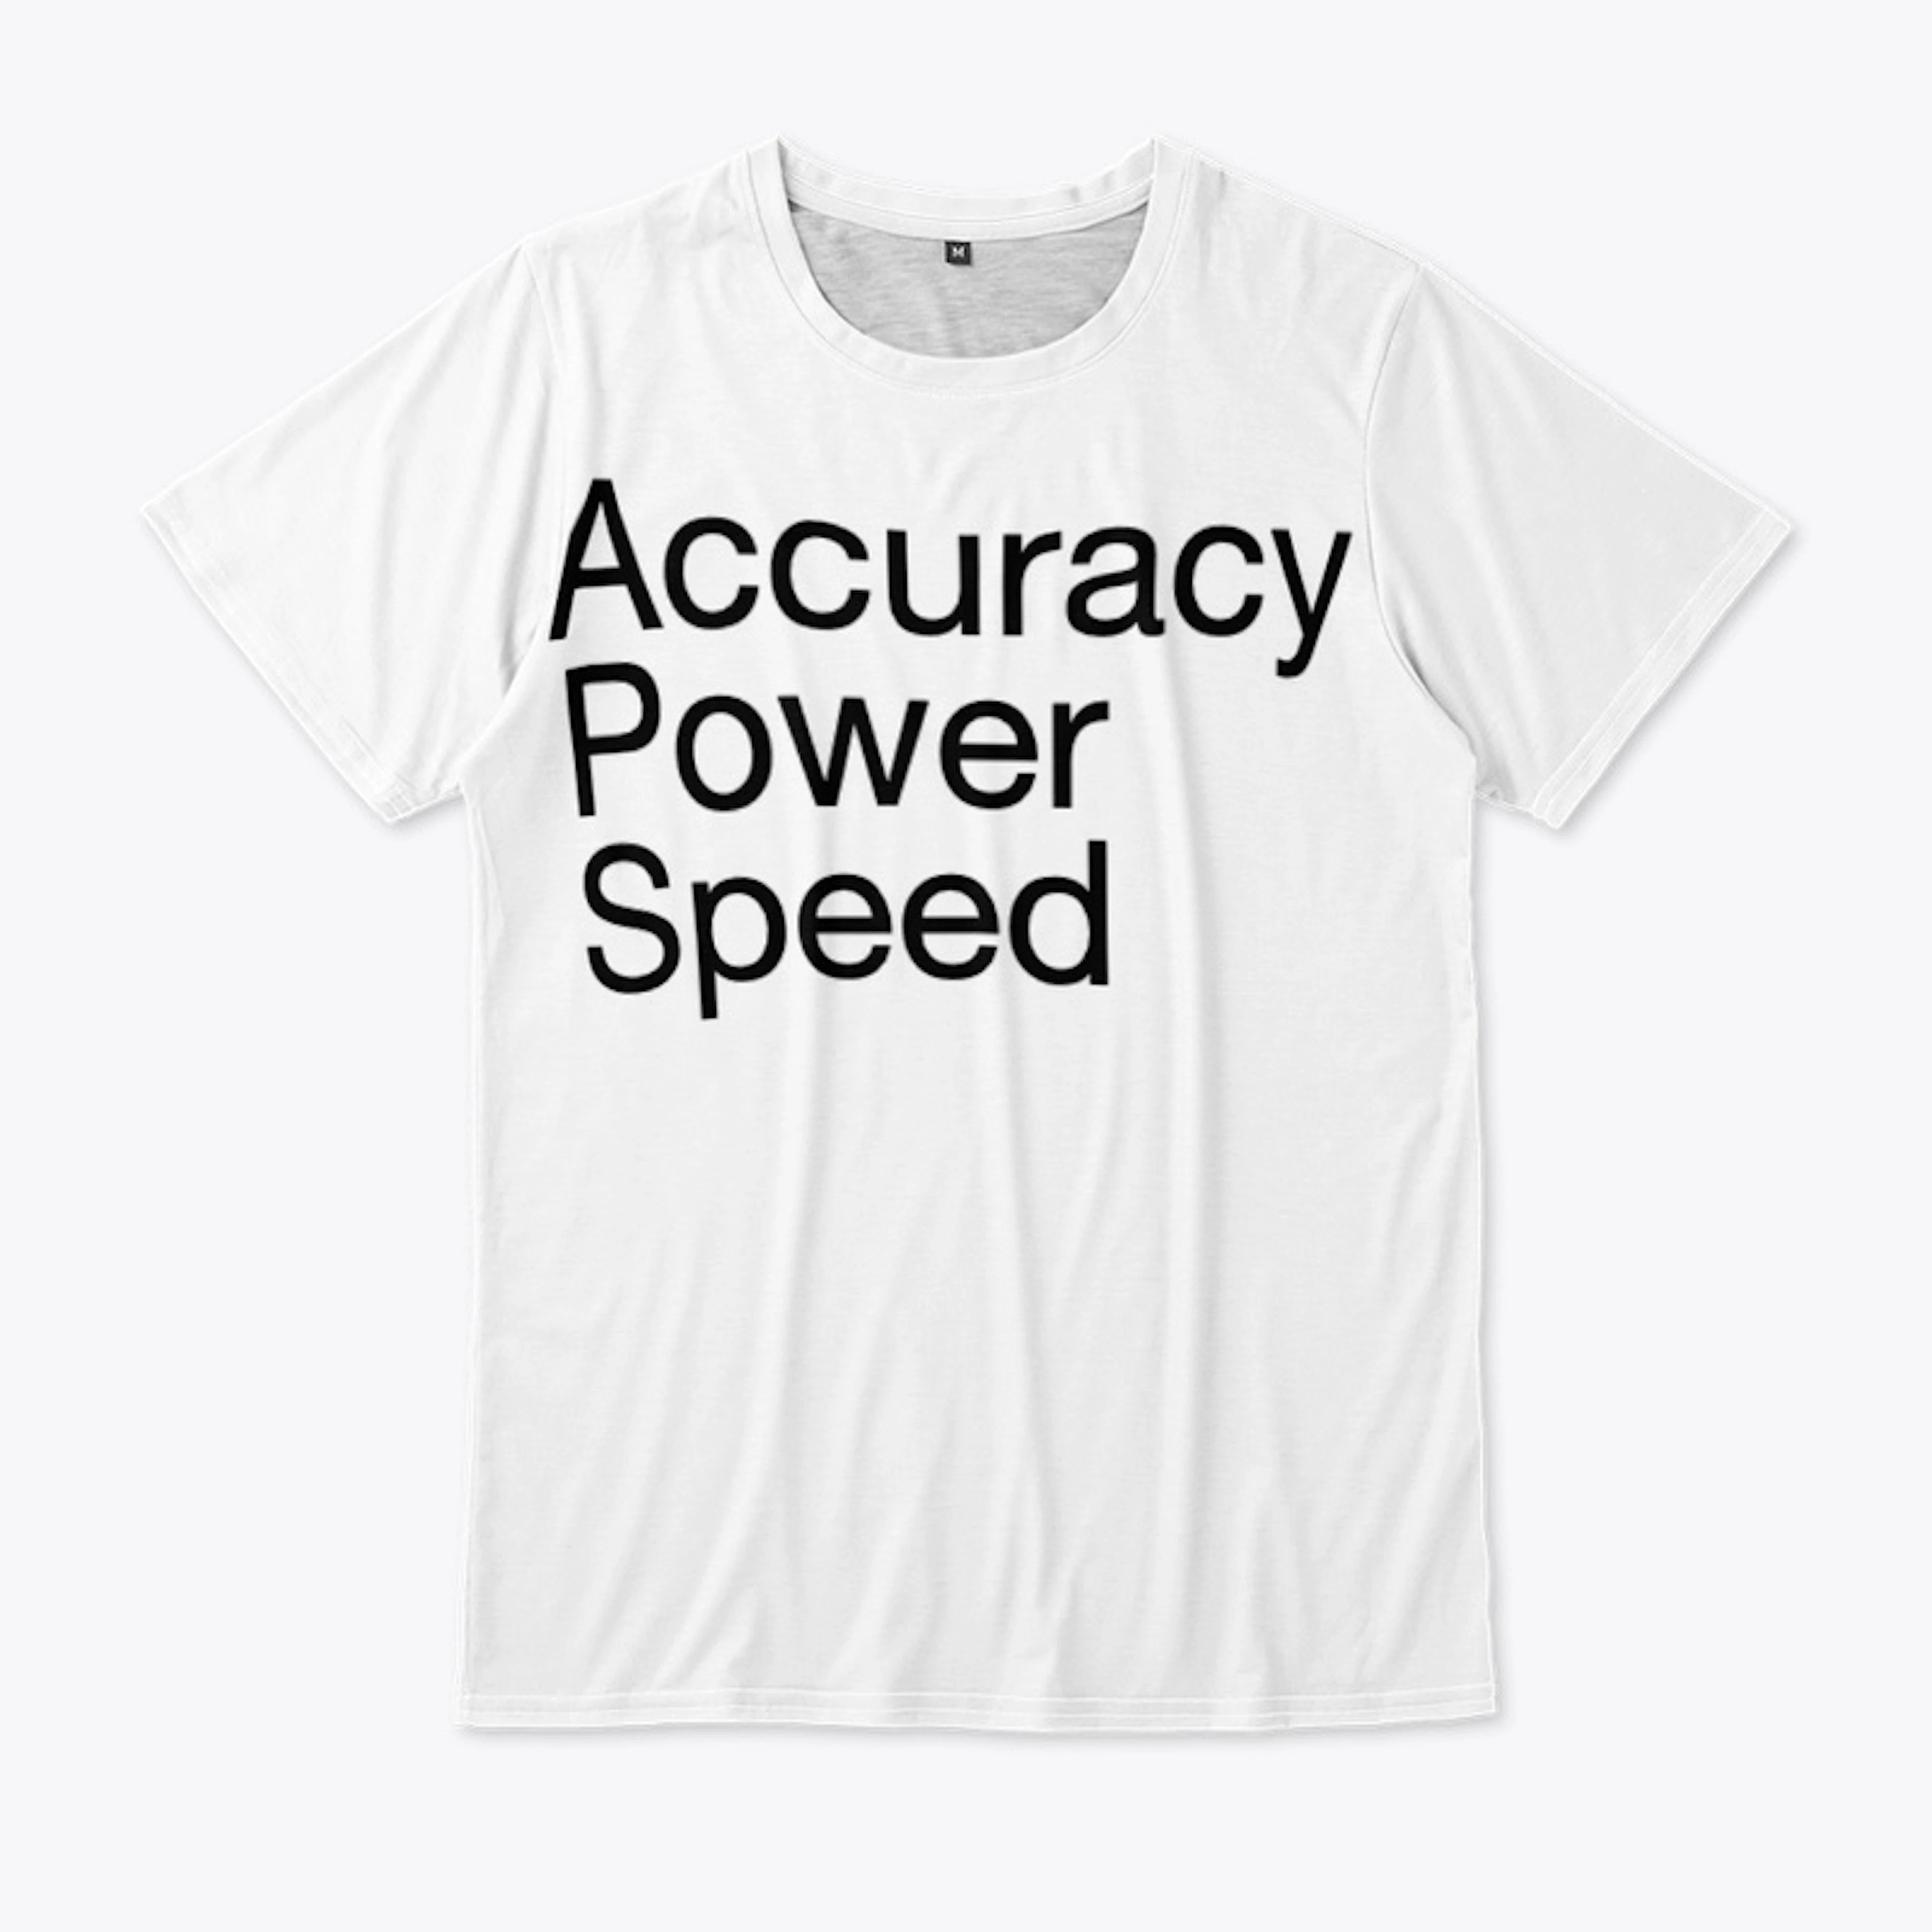 Accuracy Power Speed